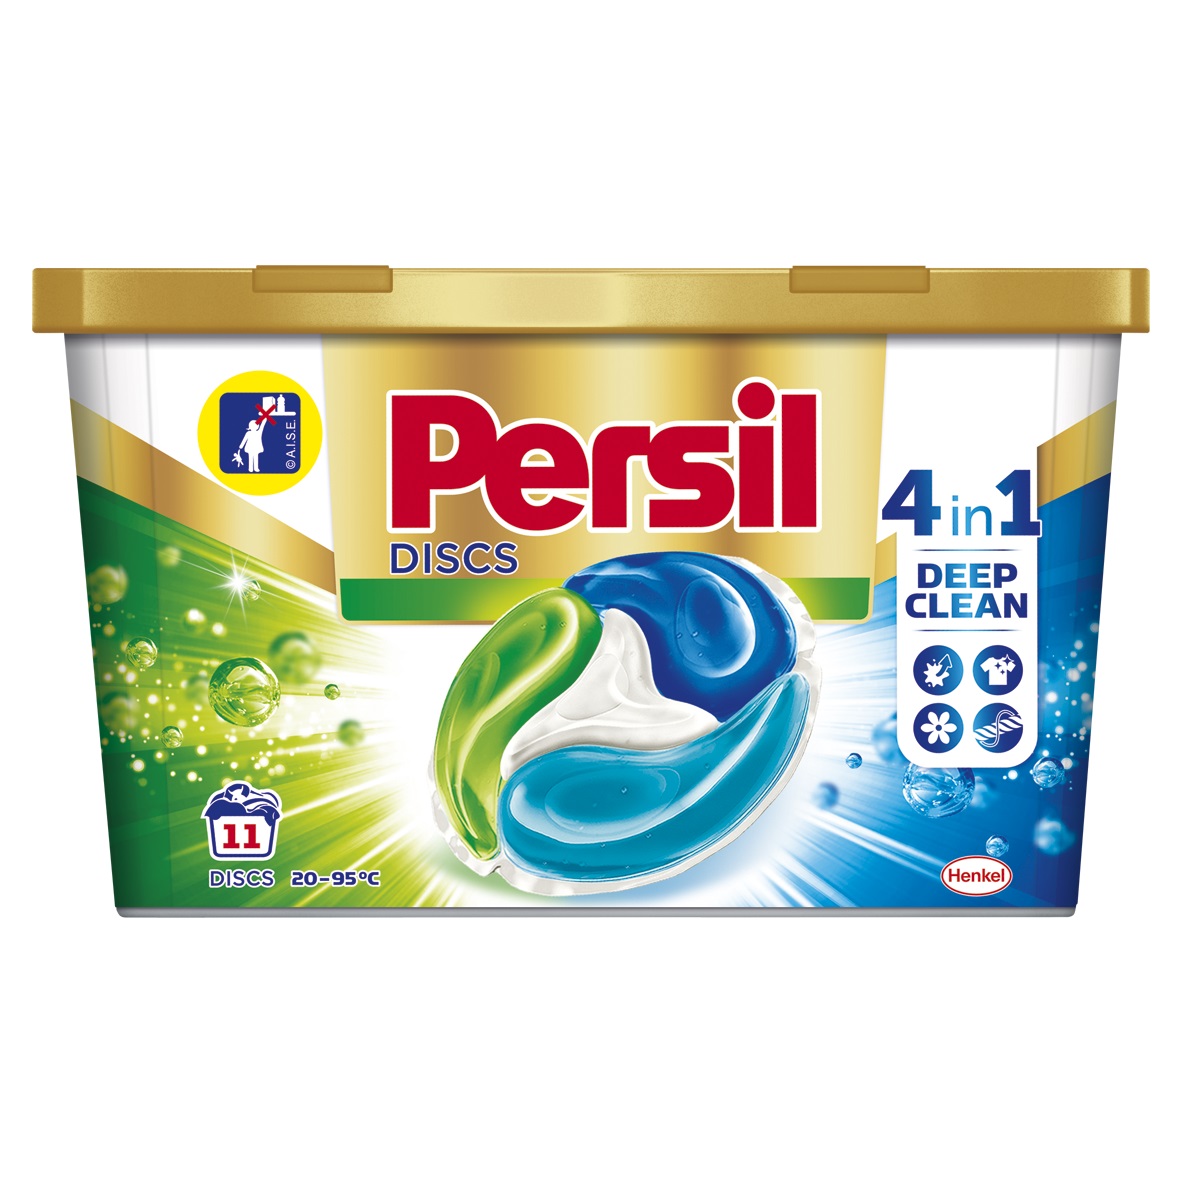 Гель для прання в капсулах Persil Discs Universal Deep Clean, 11 шт. (796703) - фото 1